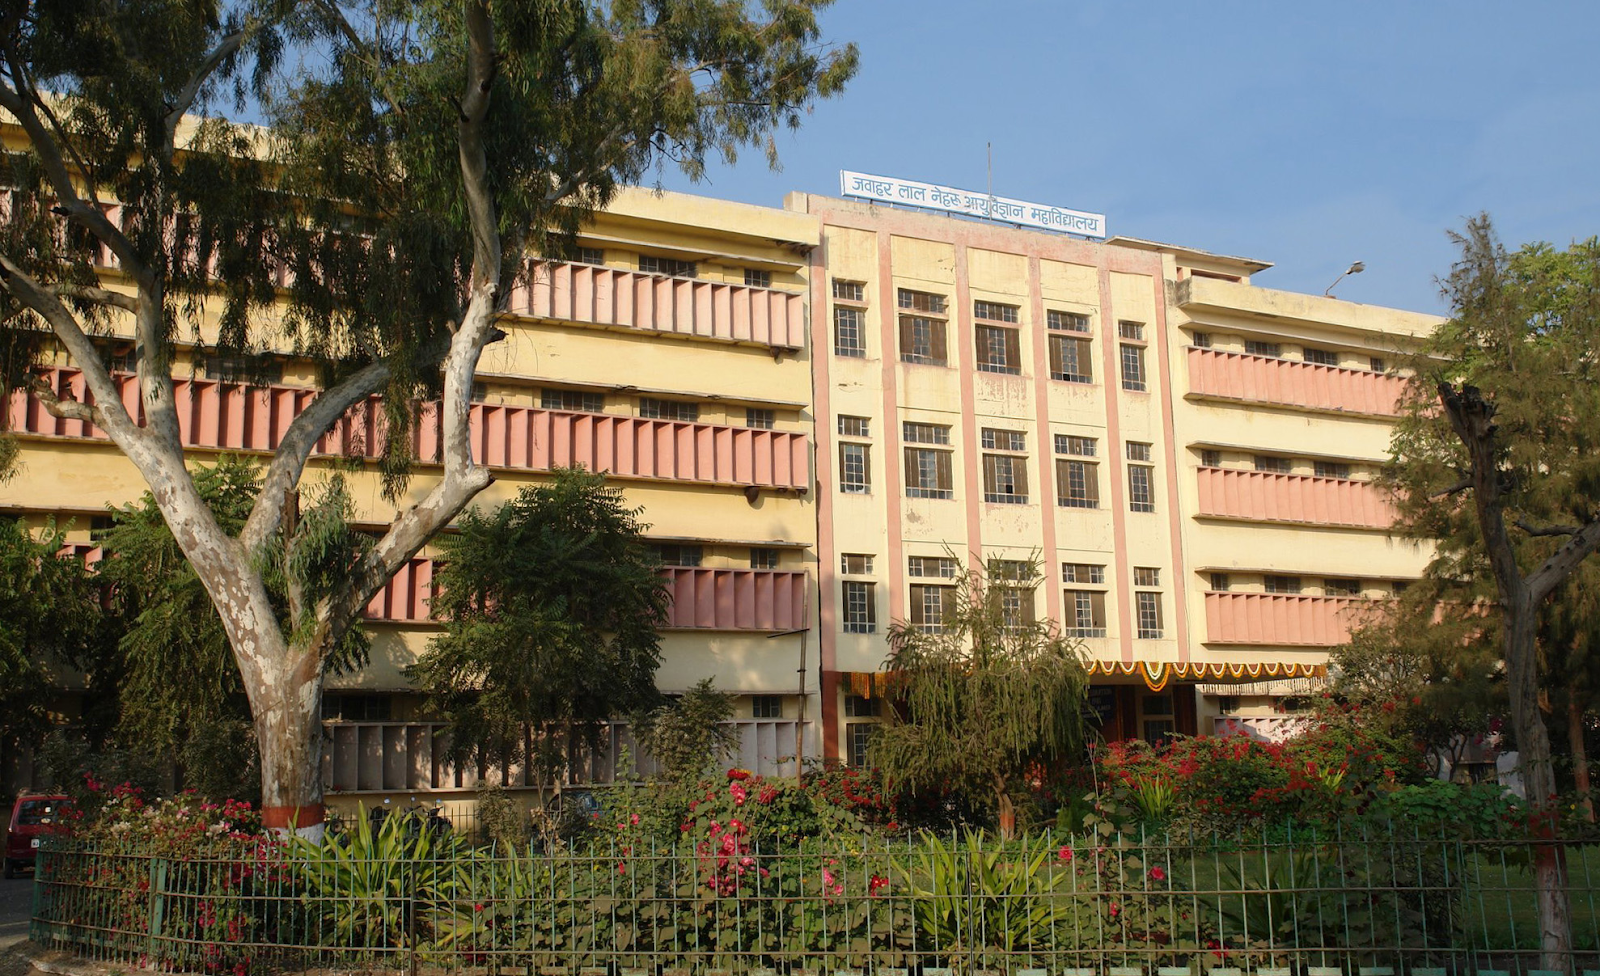 Jawaharlal Nehru Medical College Hospital